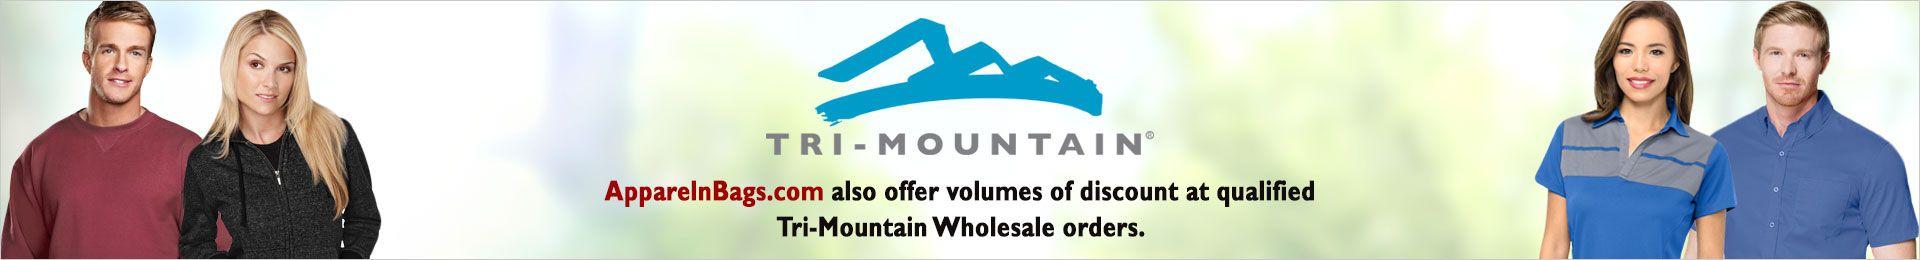 Tri-Mountain Logo - Wholesale Tri-Mountain Apparel - ApparelnBags.com